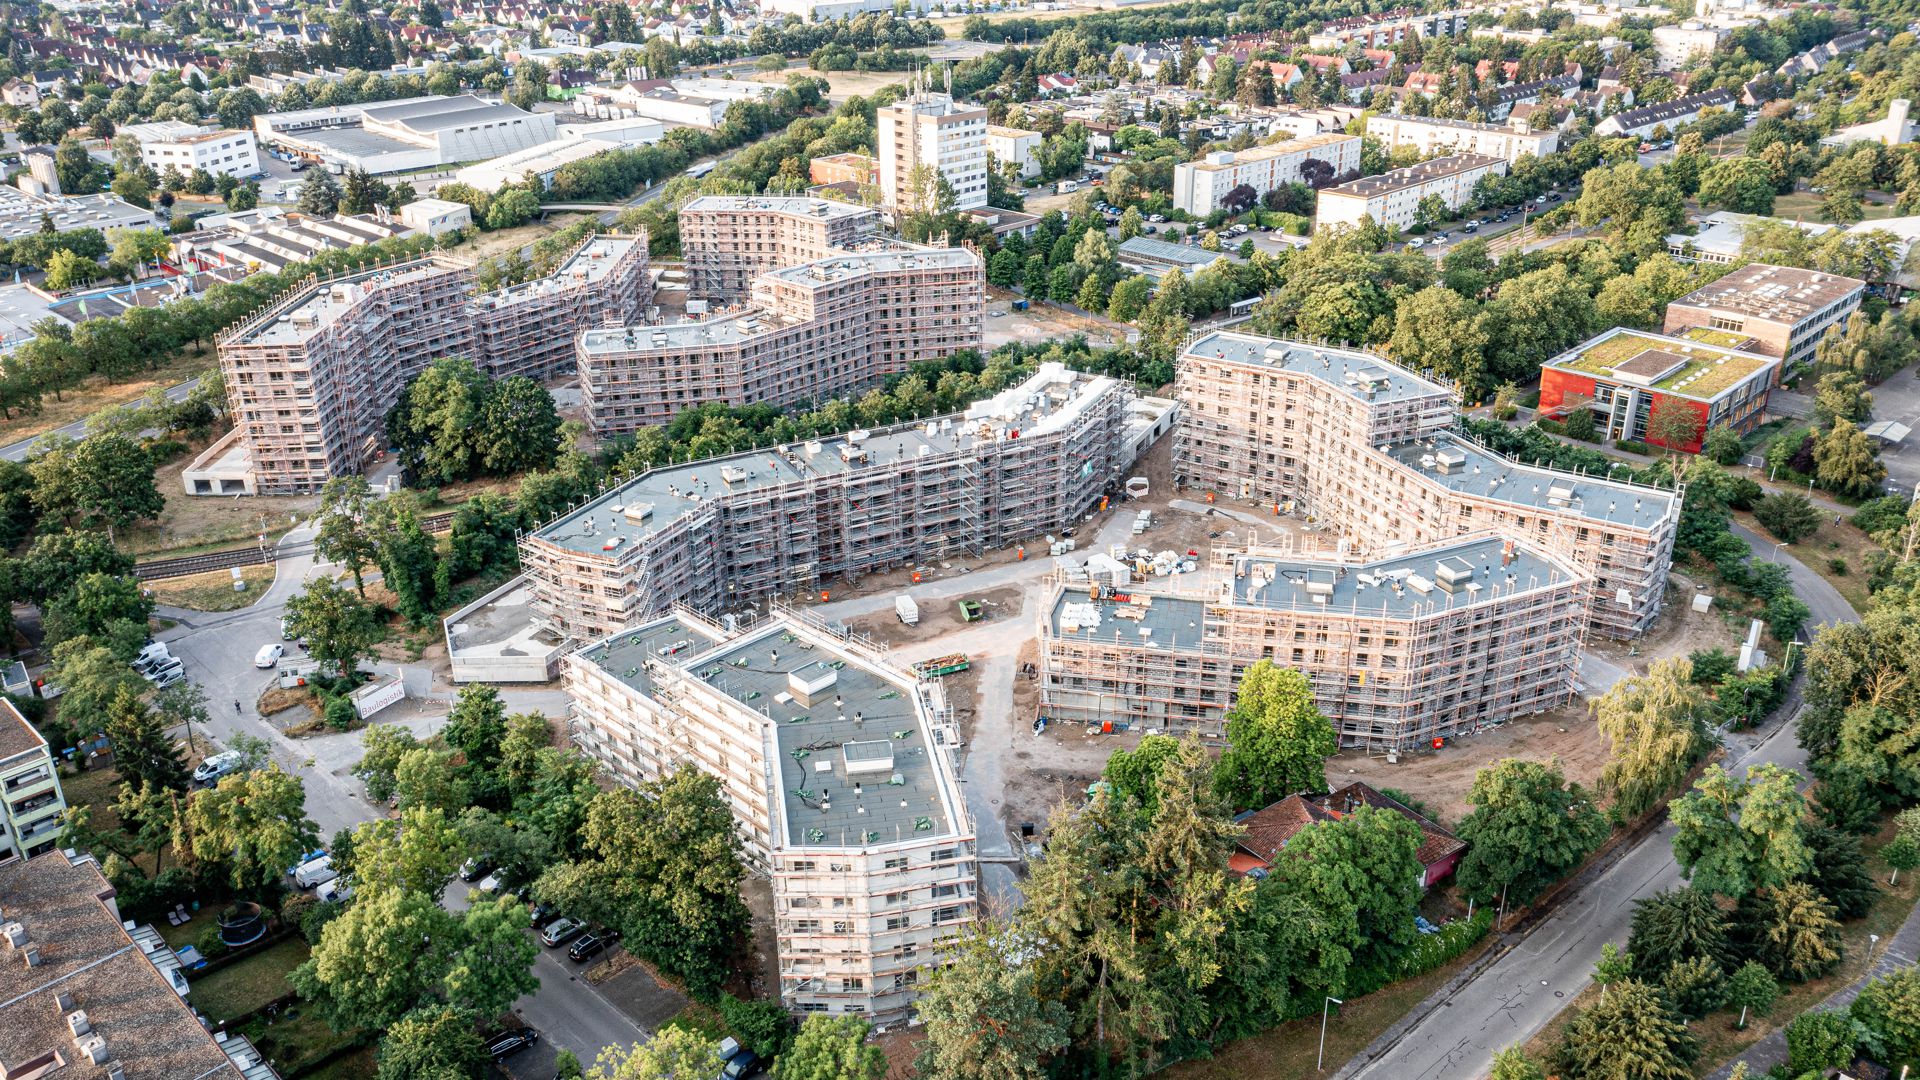 Luftbild August-Klingler-Areal im Bauzustand